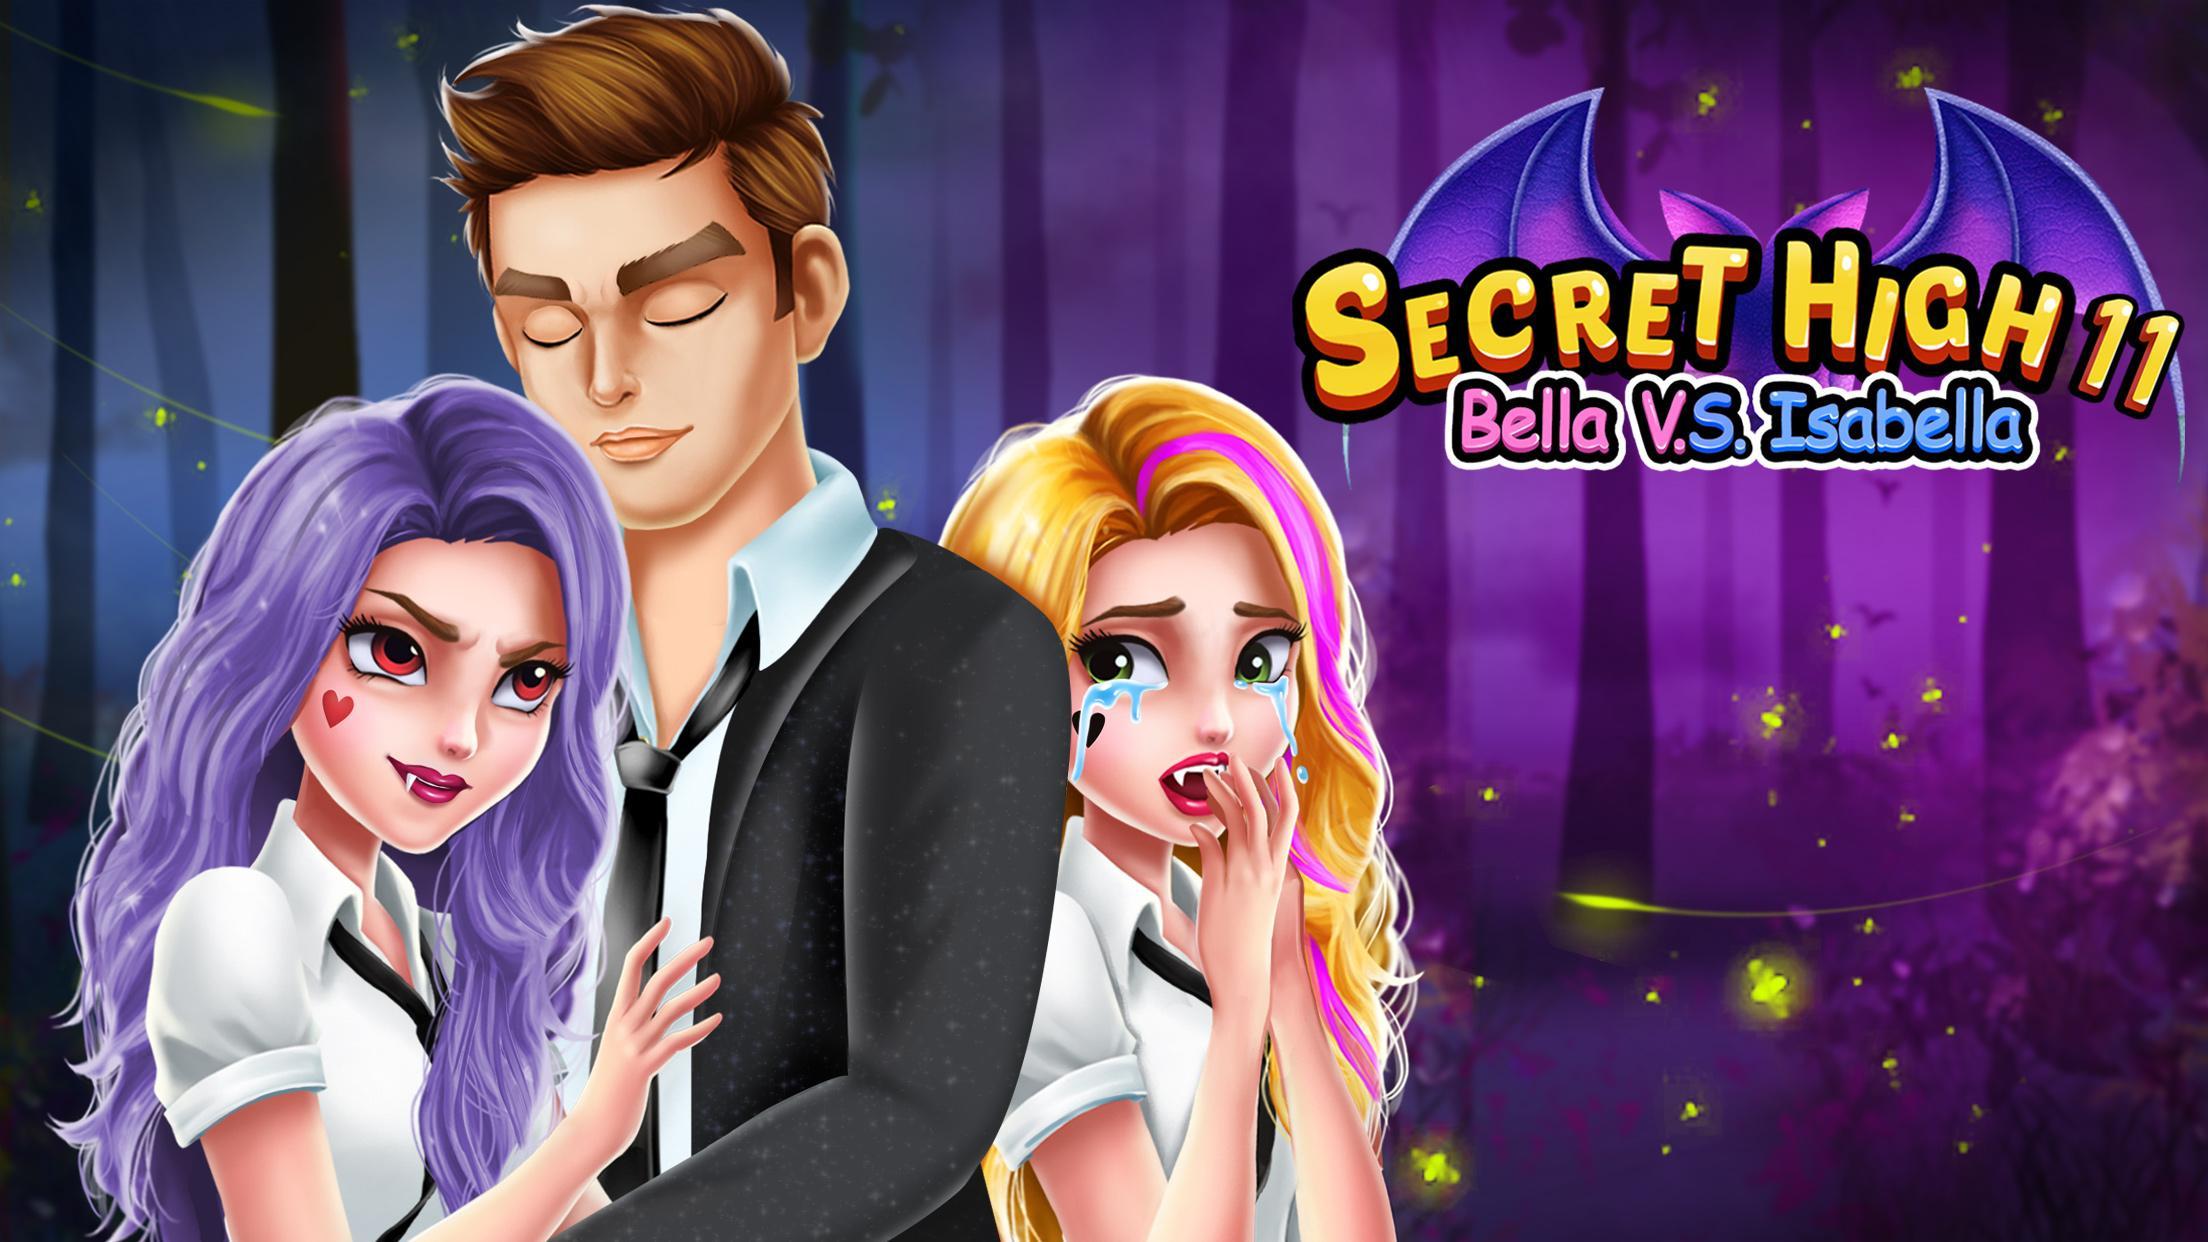 Secret High School 11 Bella Vs Isabella For Android Apk Download